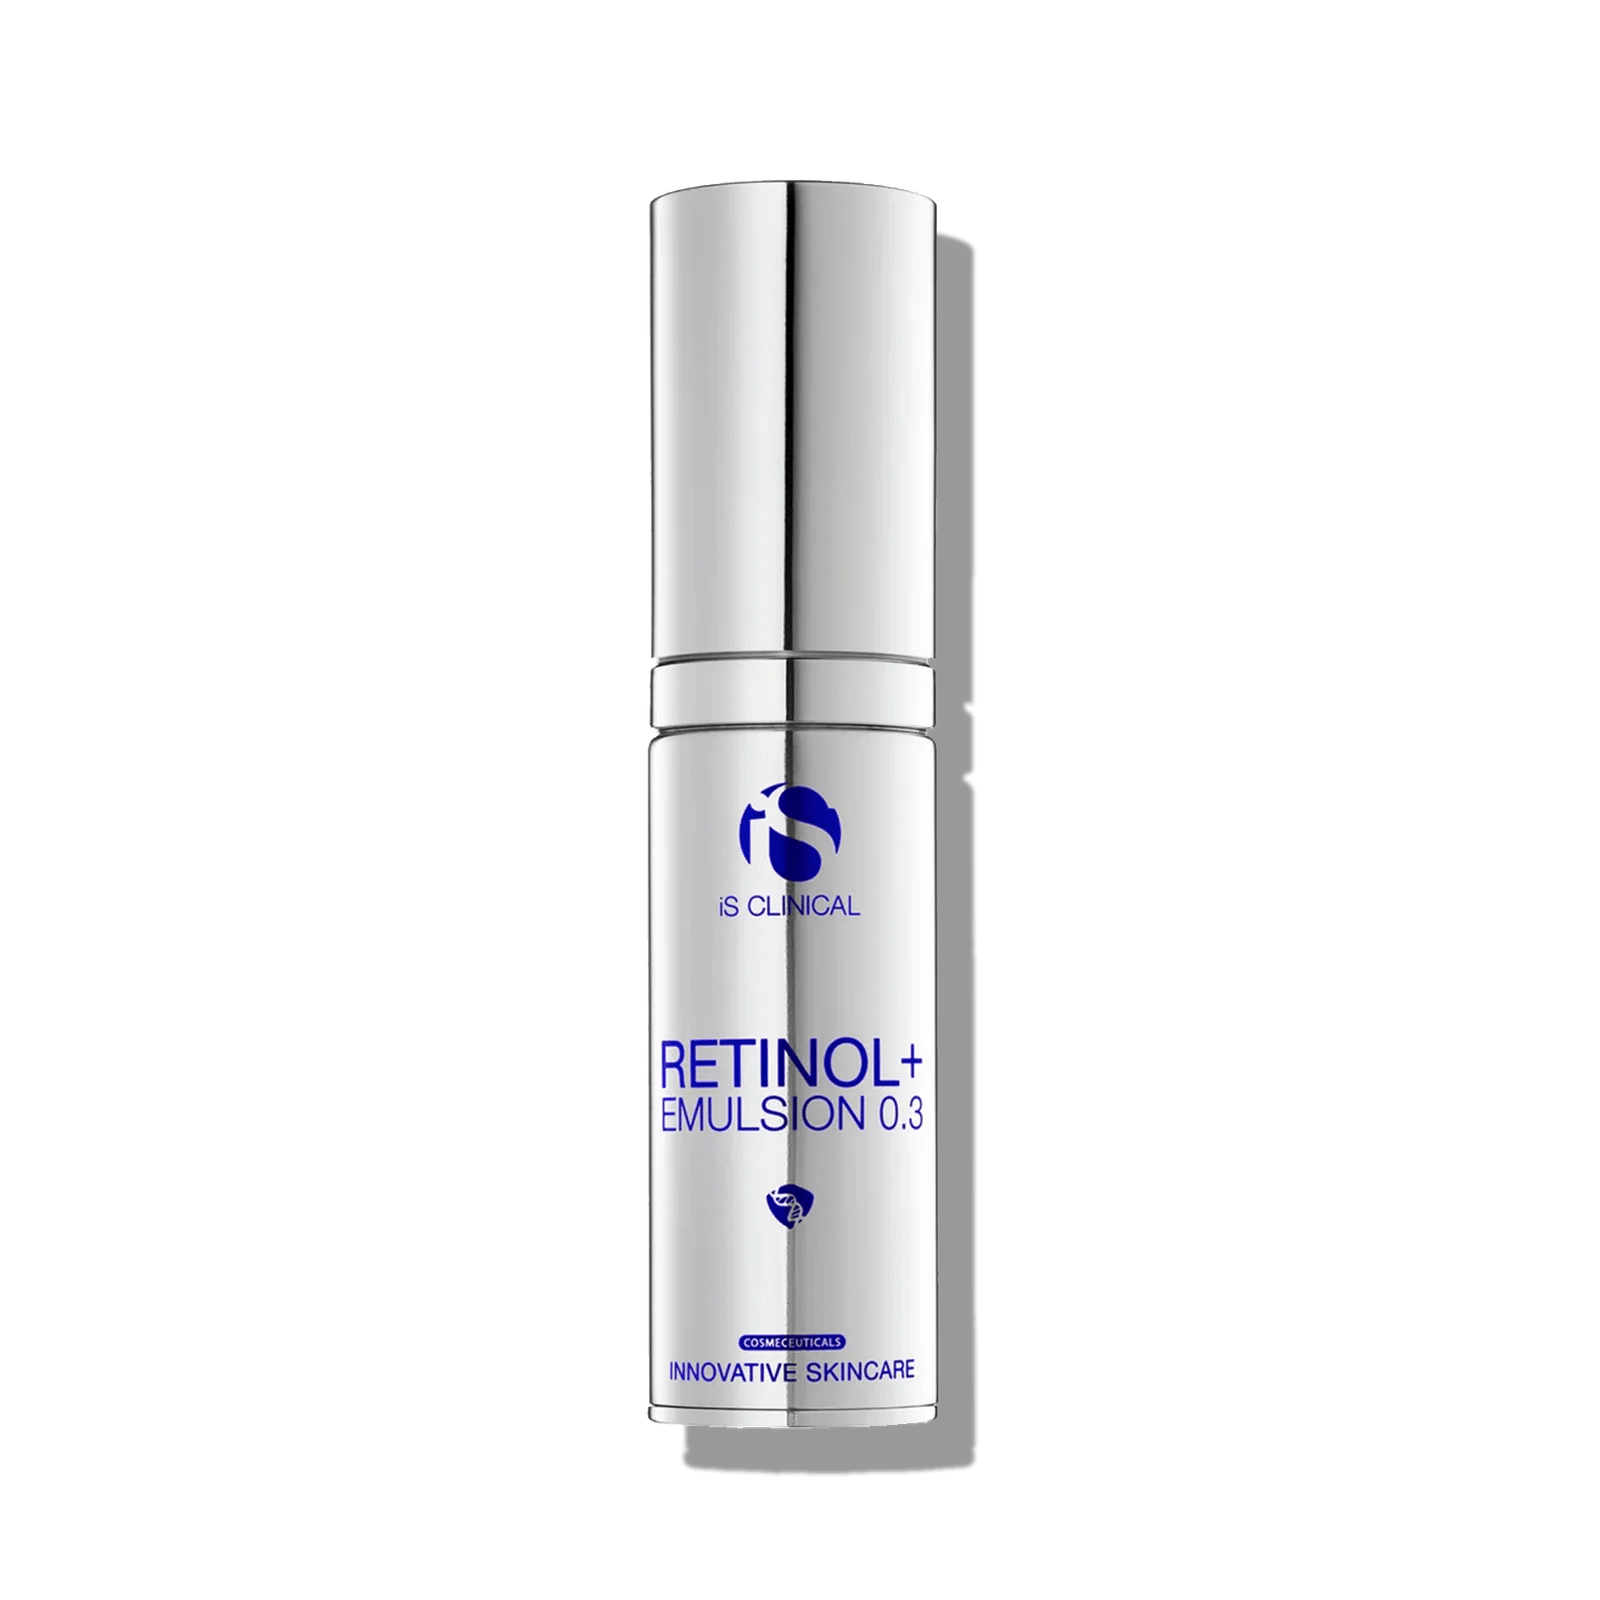 iS CLINICAL Retinol + Emulsion - MY SKIN SPOT